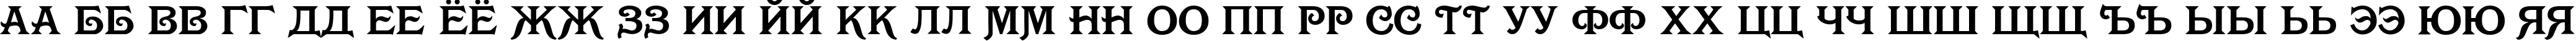 Пример написания русского алфавита шрифтом Olympia Deco